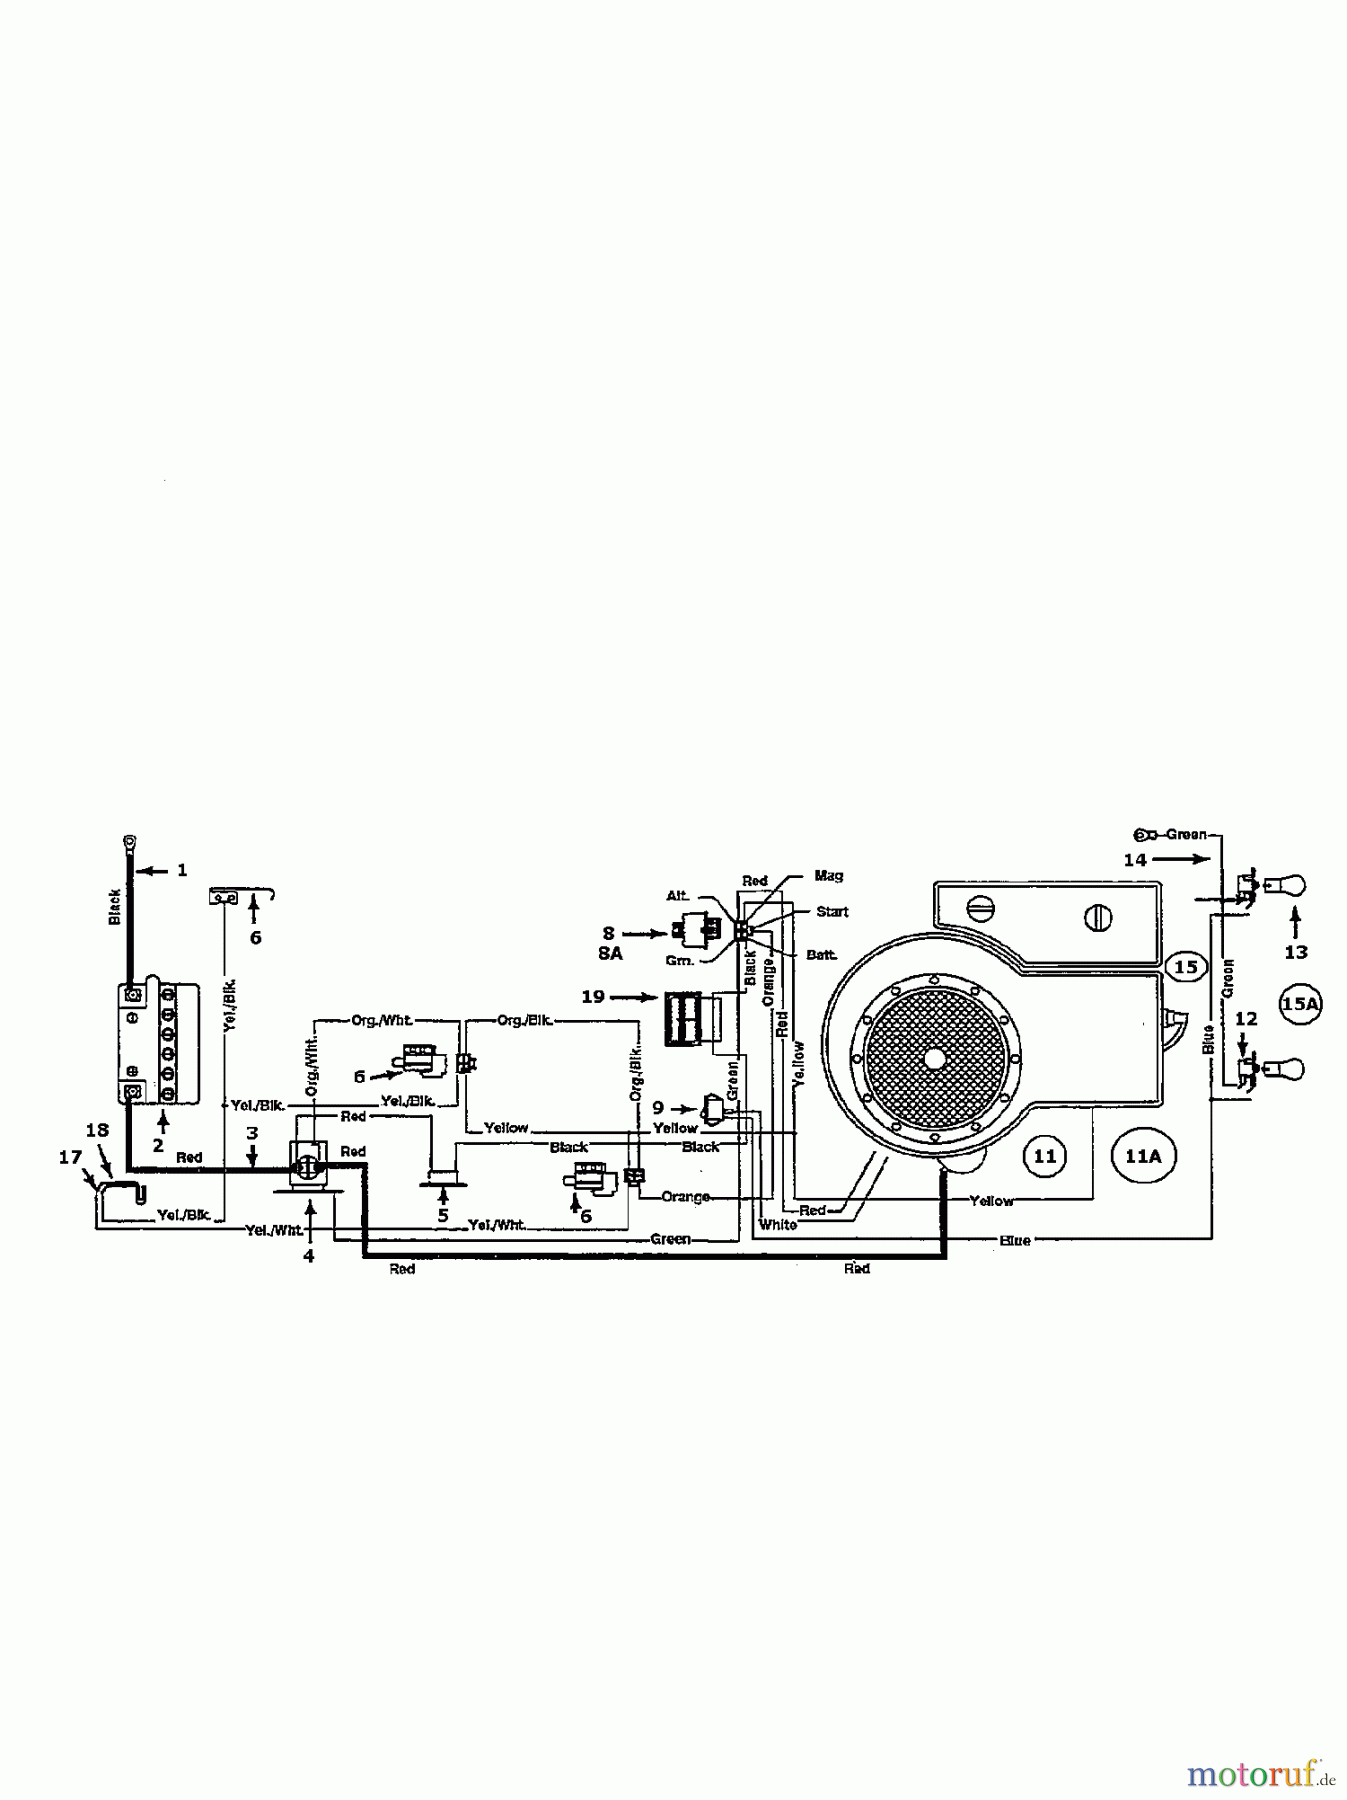  Mastercut Lawn tractors 112/910 134I451E602  (1994) Wiring diagram single cylinder